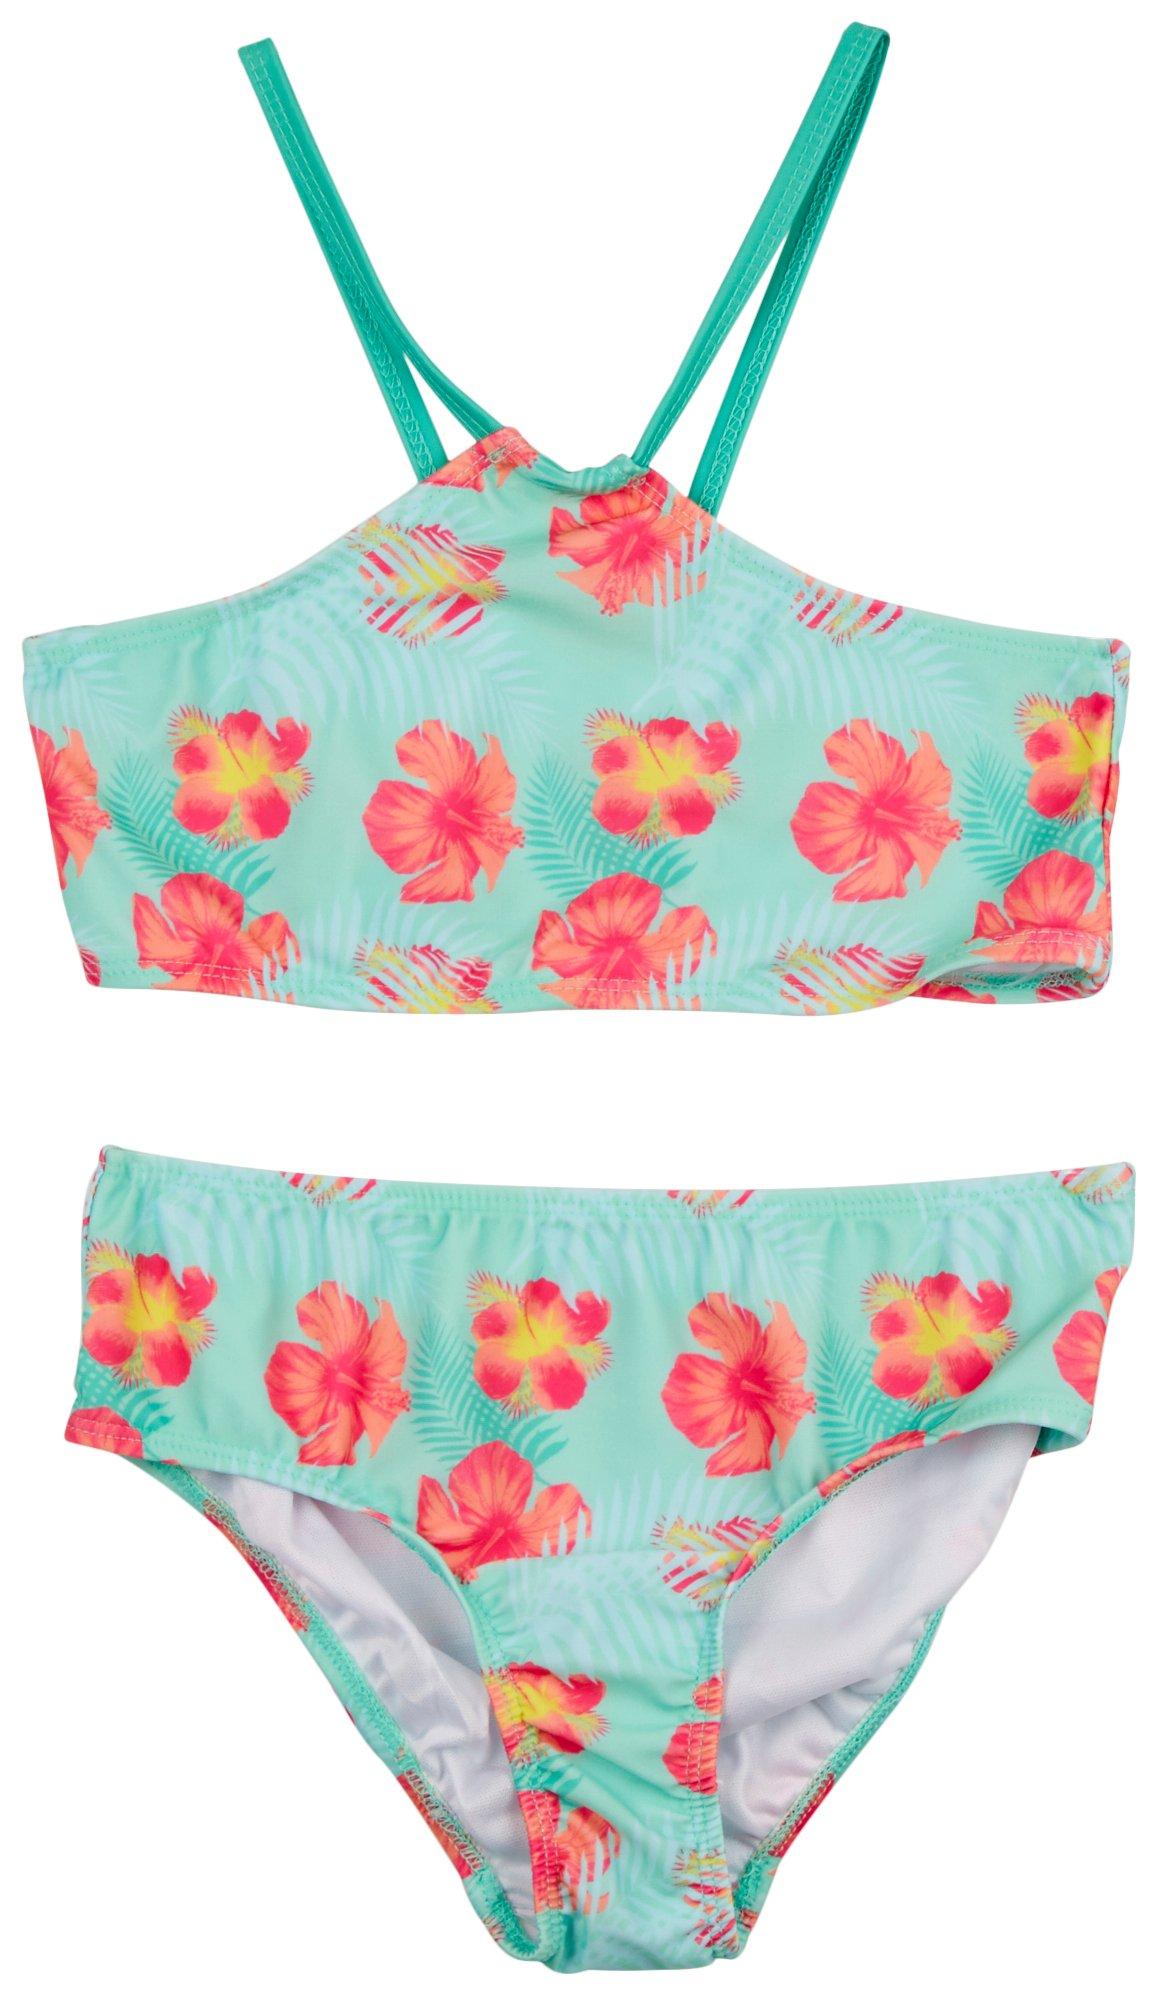 BRIGHT SKY Big Girls 2-pc. Floral Bandana Swimsuit Set